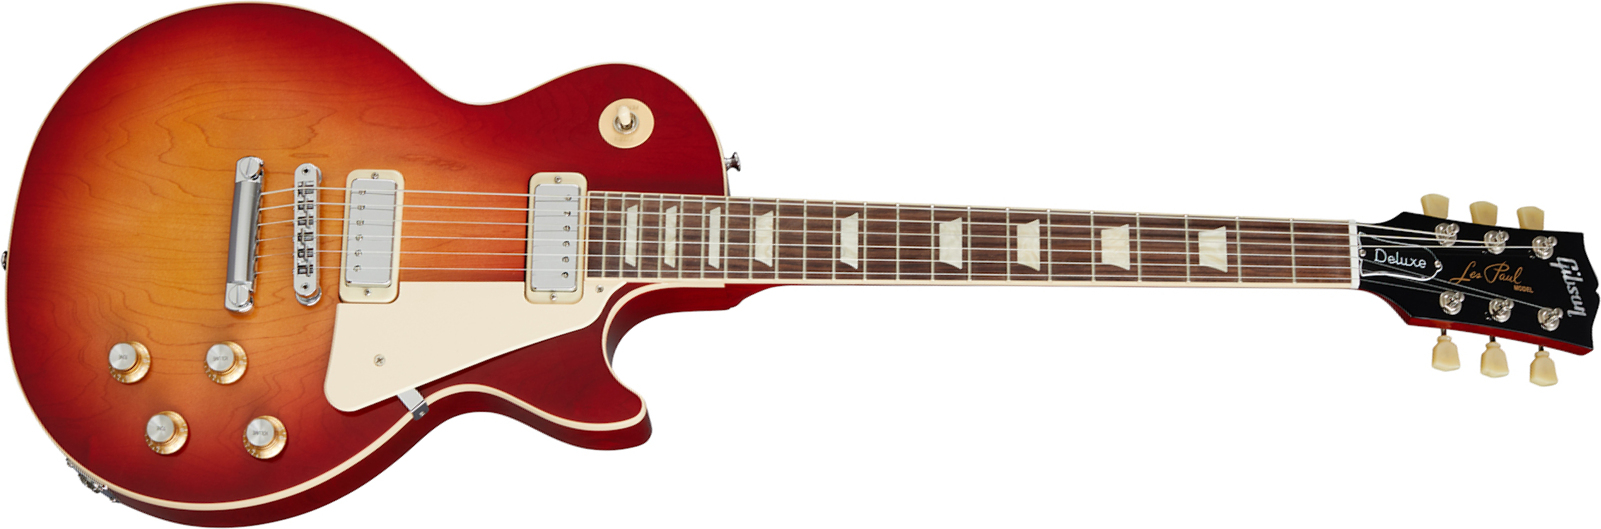 Gibson Les Paul Deluxe 70s Original 2mh Ht Rw - 70s Cherry Sunburst - Single cut electric guitar - Main picture